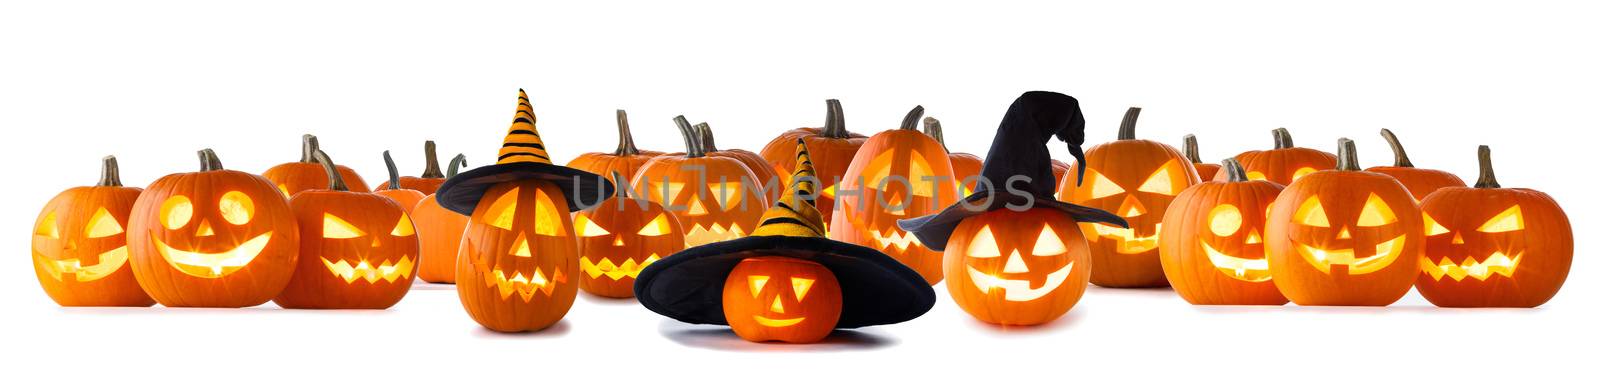 Big set of Halloween pumpkins by Yellowj